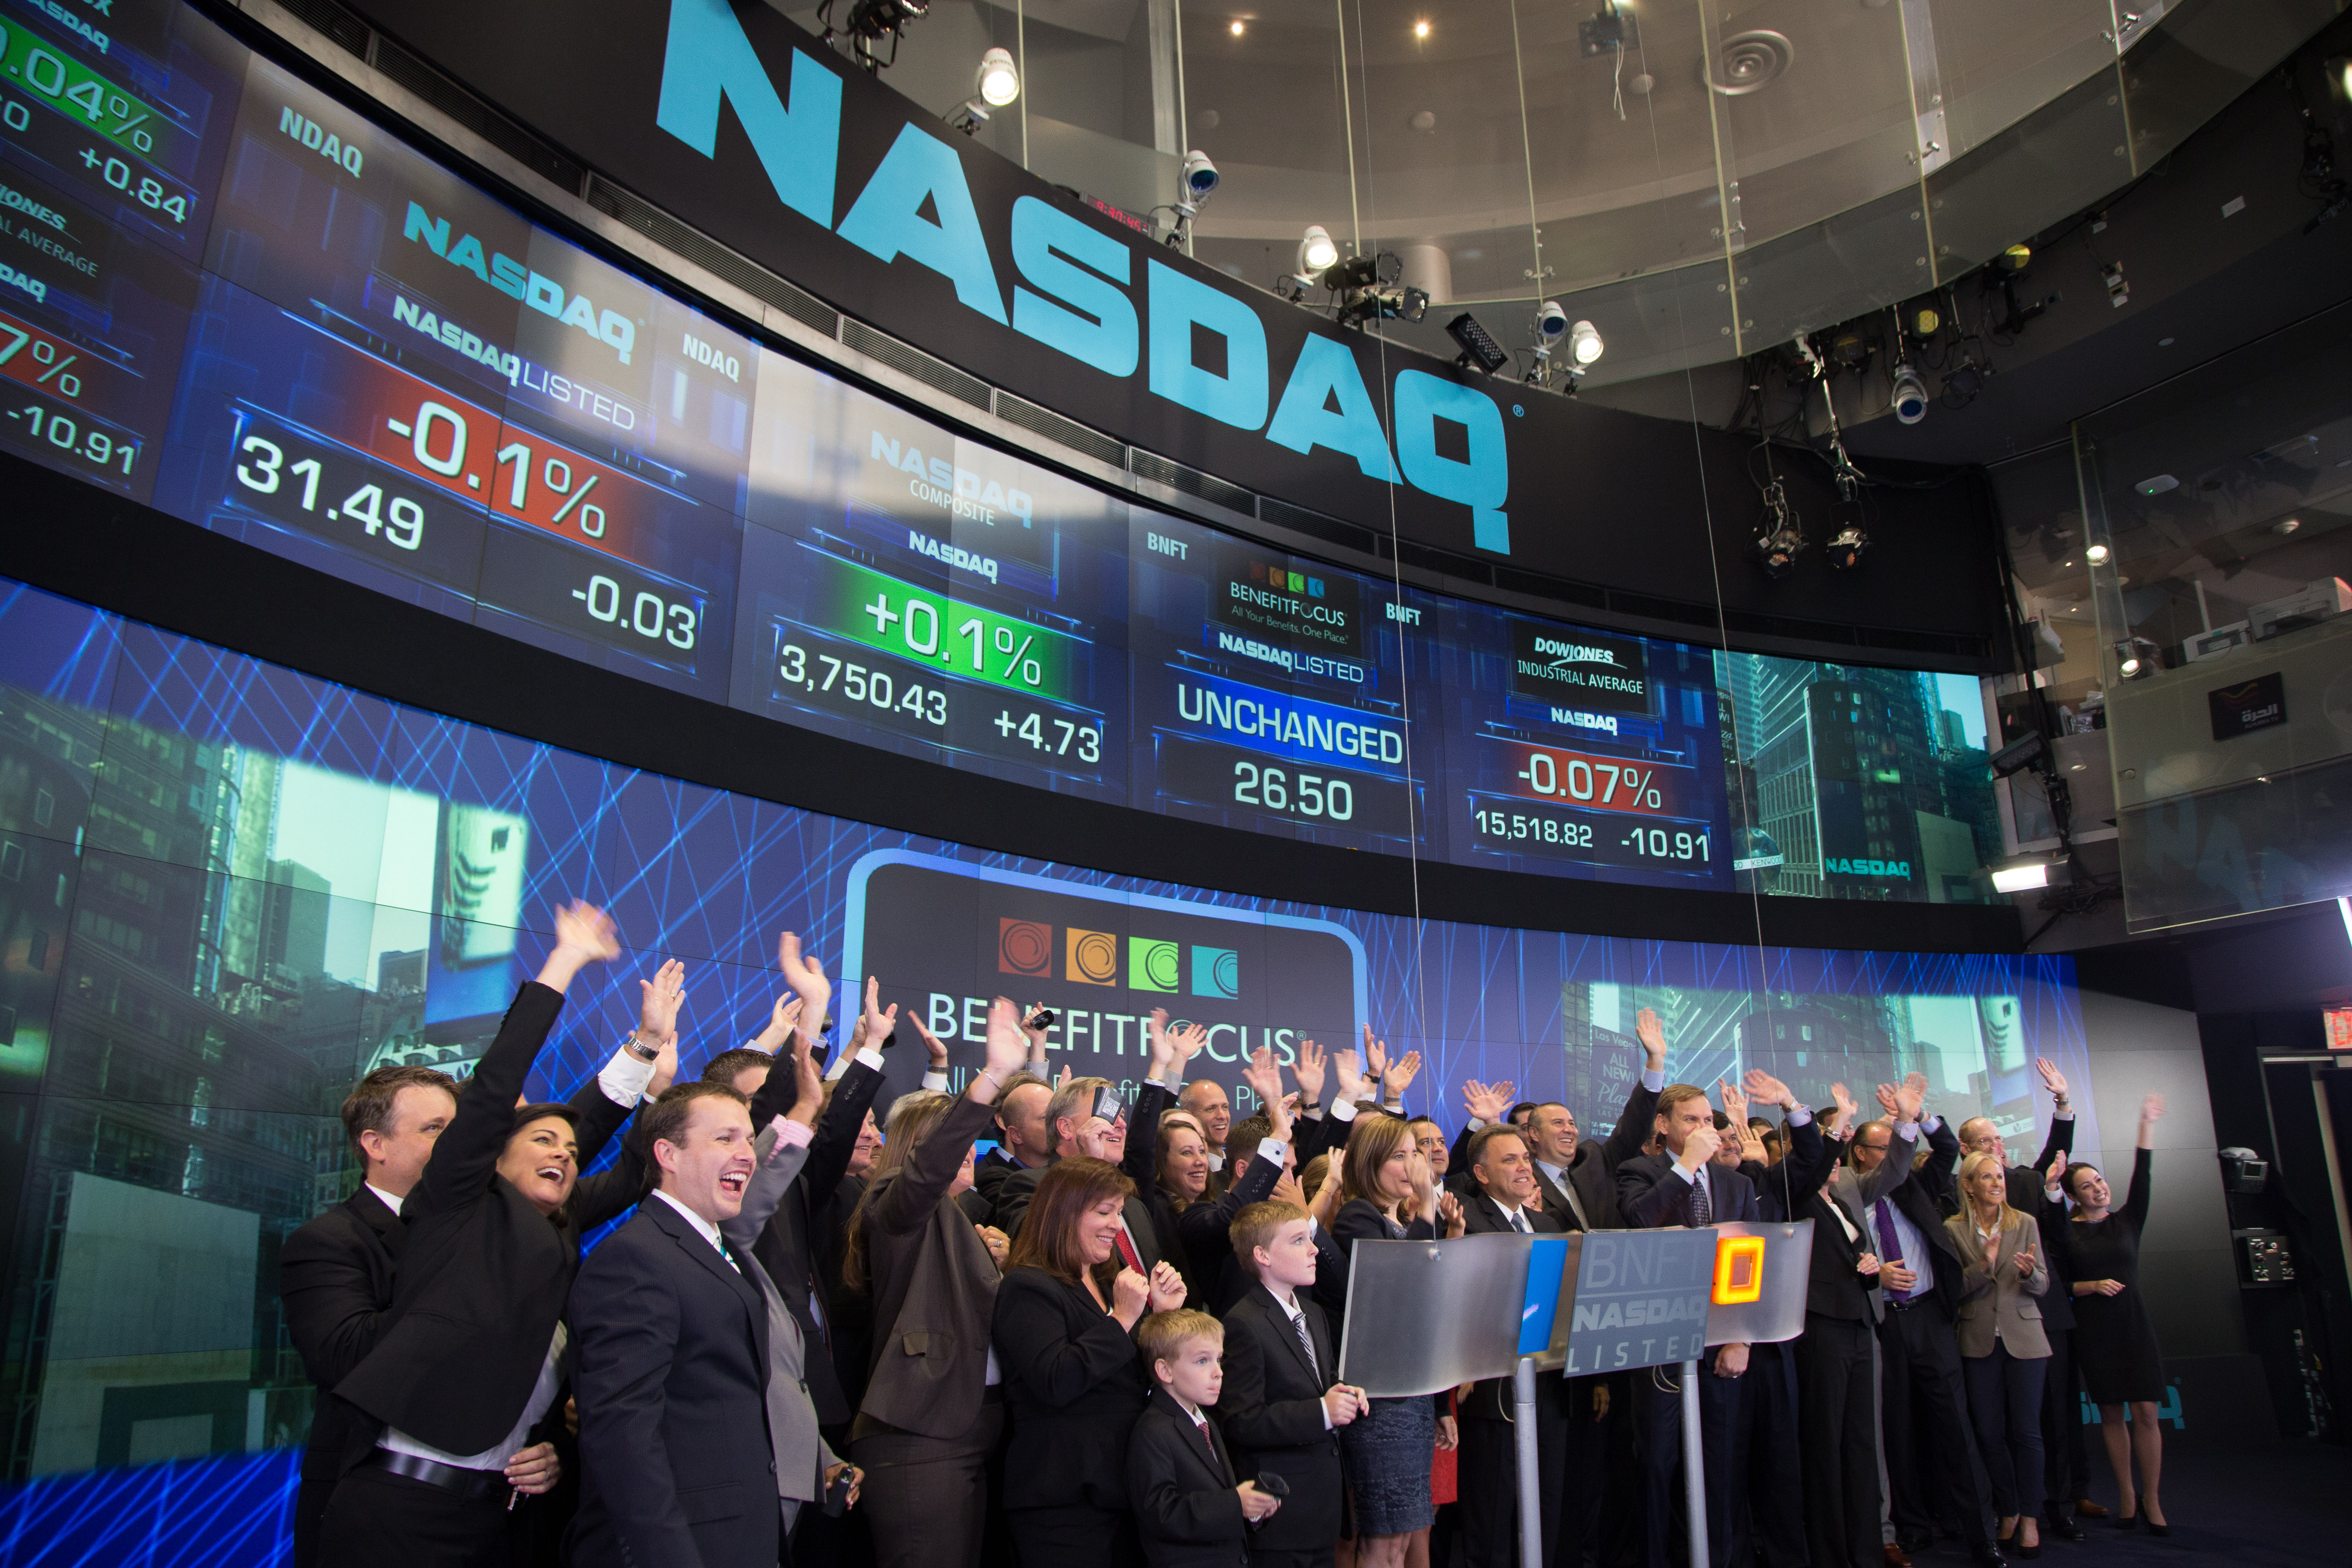 NASDAQ Welcomes Benefitfocus (NDAQ: BNFT) to The NASDAQ Stock Market